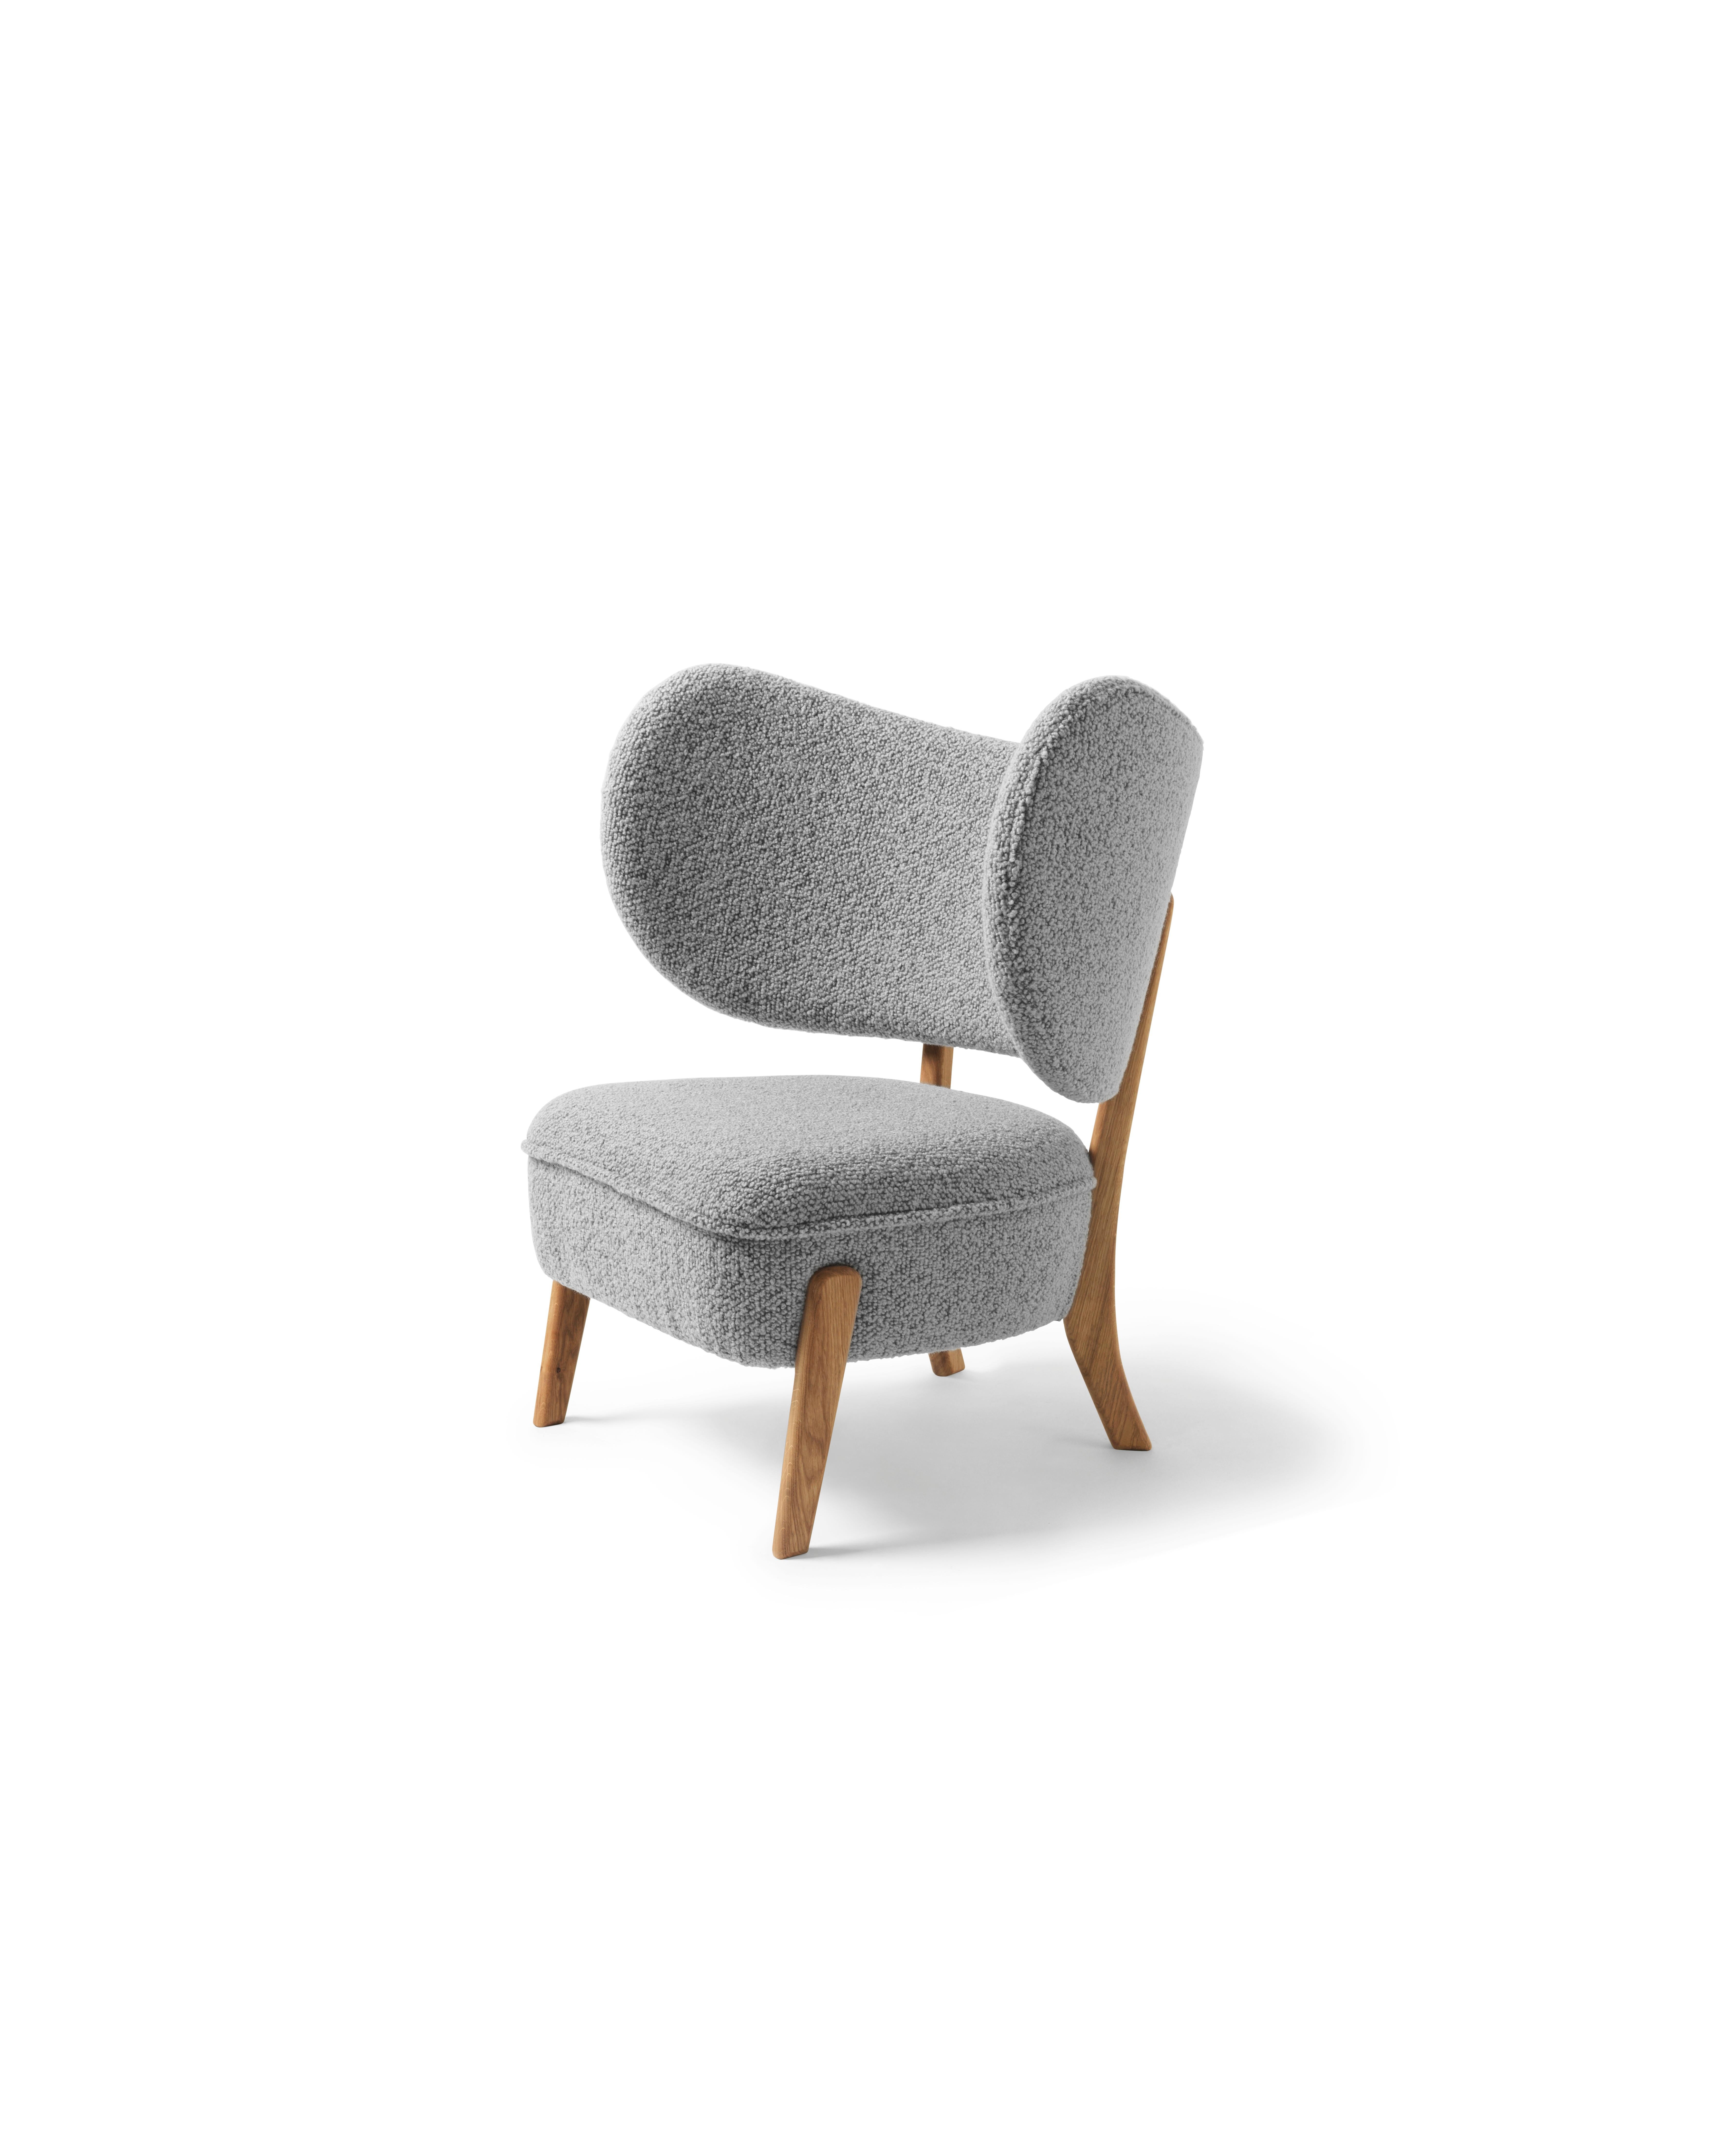 BUTE/Storr TMBO Lounge Chair by Mazo Design
Dimensions: W 90 x D 68.5 x H 87 cm
Materials: Oak, Textile
Also Available: ROMO/Linara, DAW/Royal, KVADRAT/Remix, KVADRAT/Hallingdal & Fiord, DEDAR/Linear,
DAW/Mohair & Mcnutt, Sheepskin.

1935 is